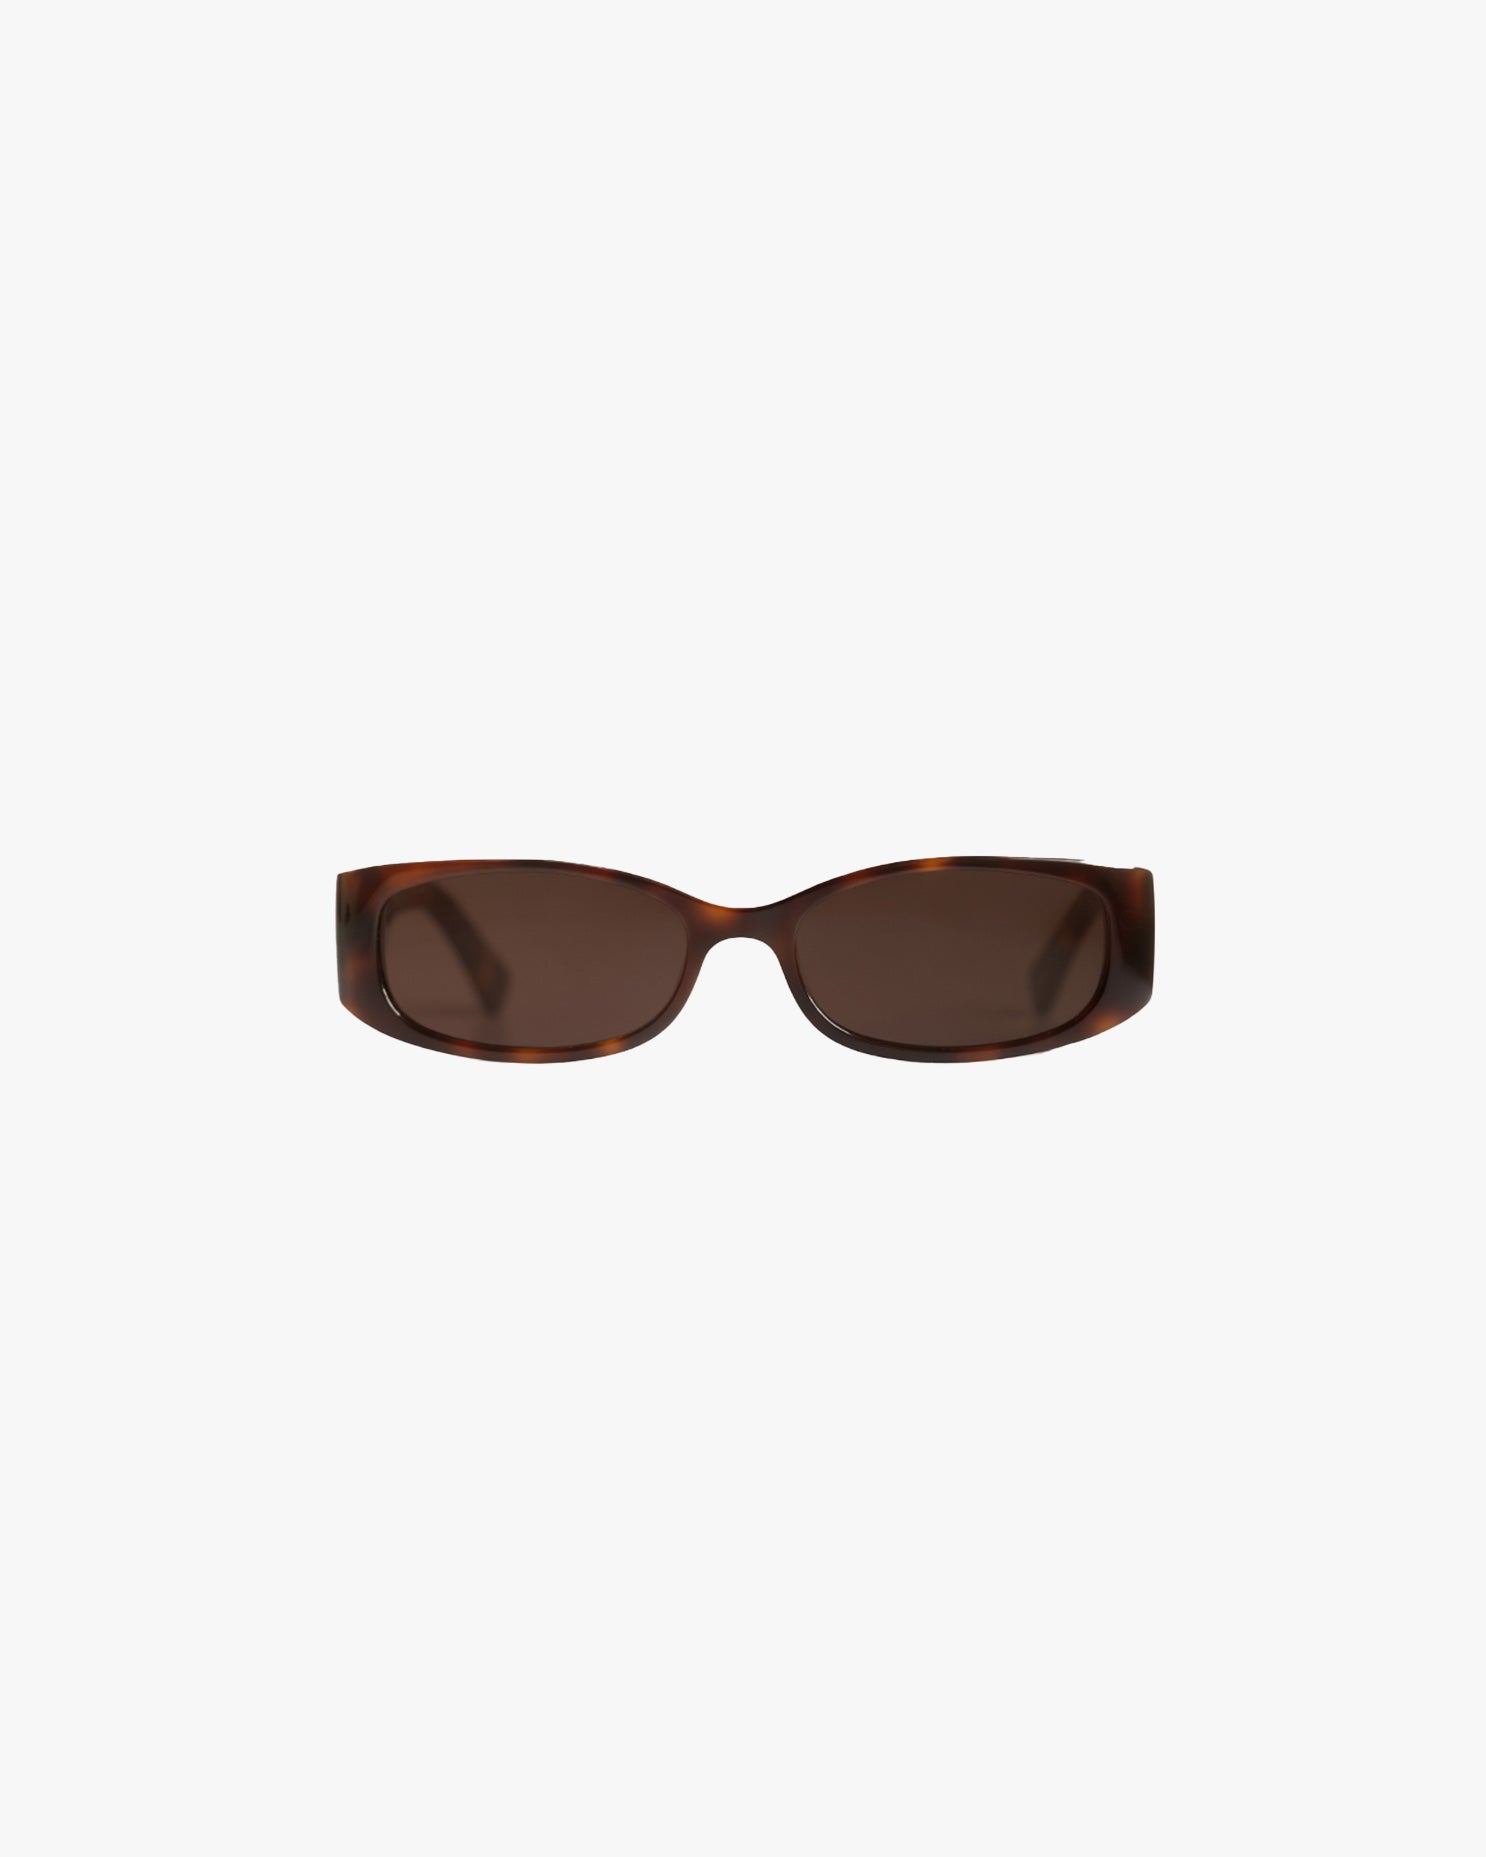 Romy Sunglasses in Tortoise Brown